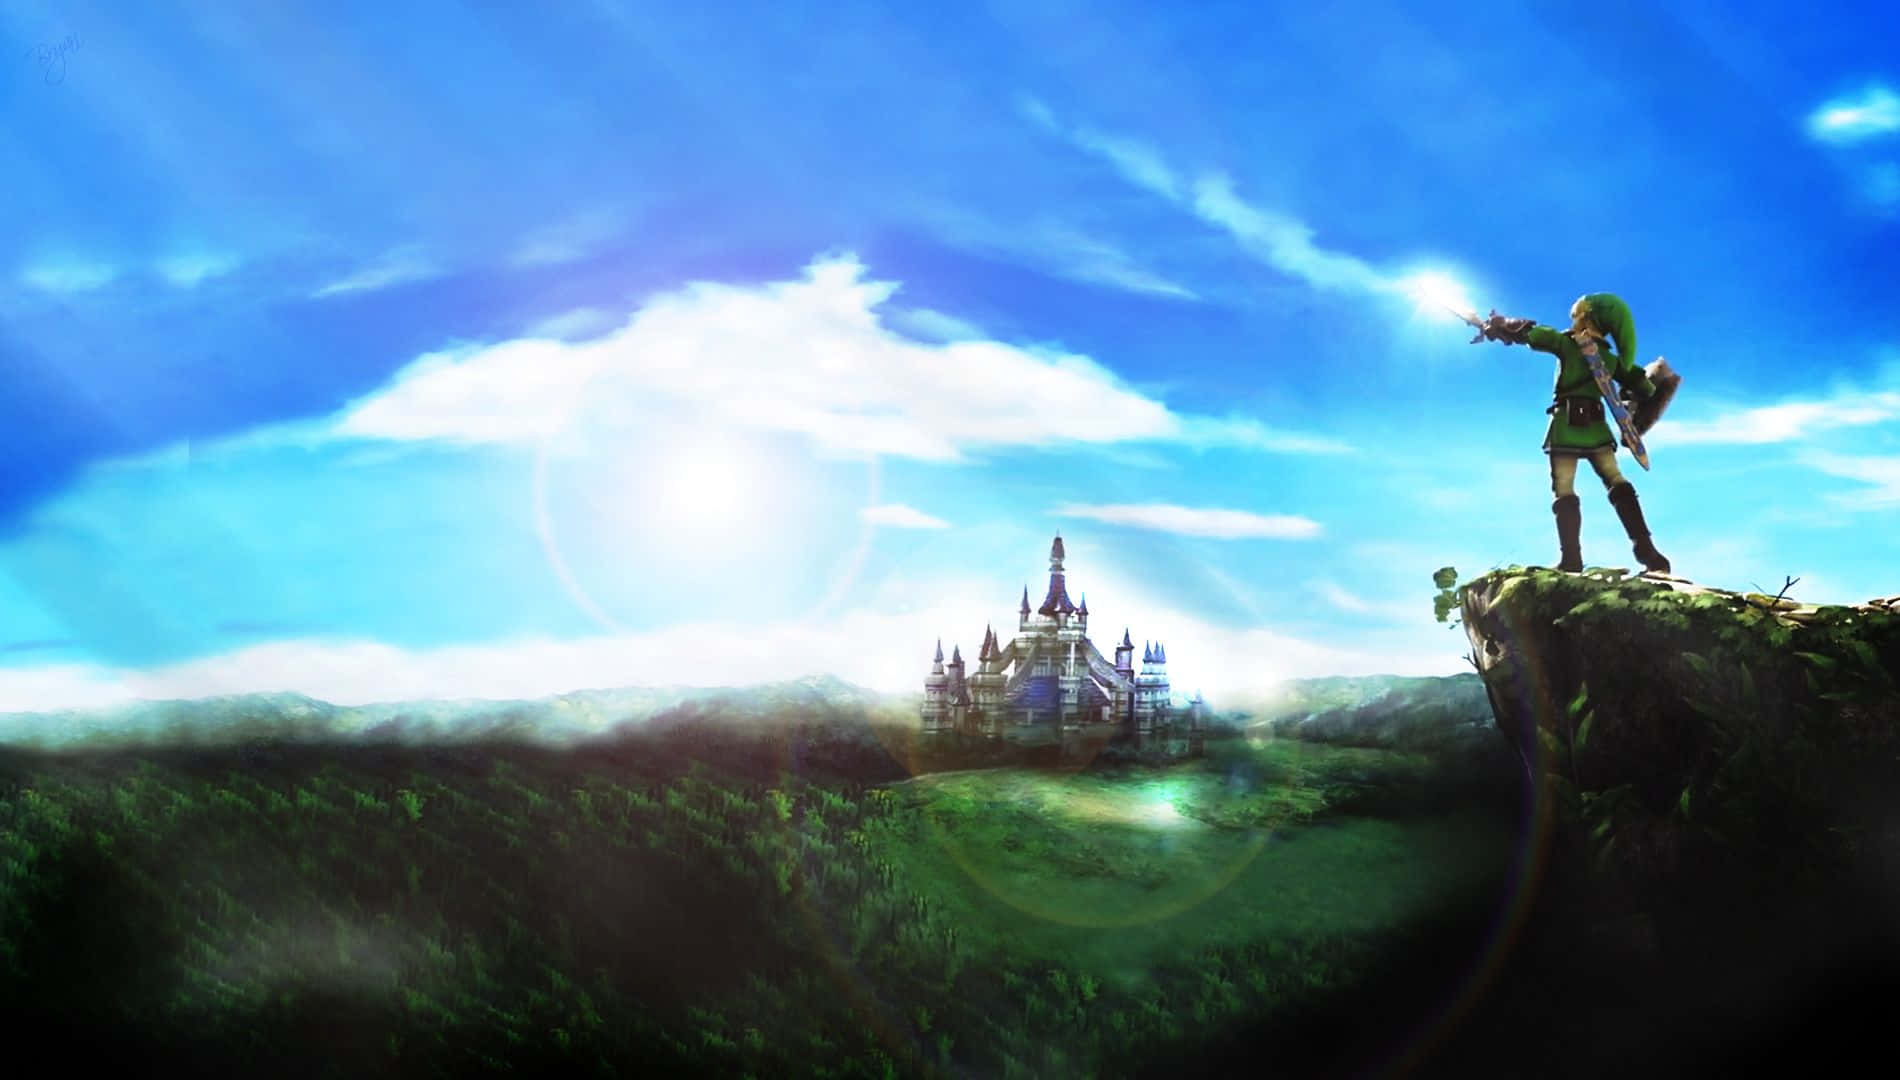 Linke Zelda Corrono Per Salvare L'arcipelago In The Legend Of Zelda